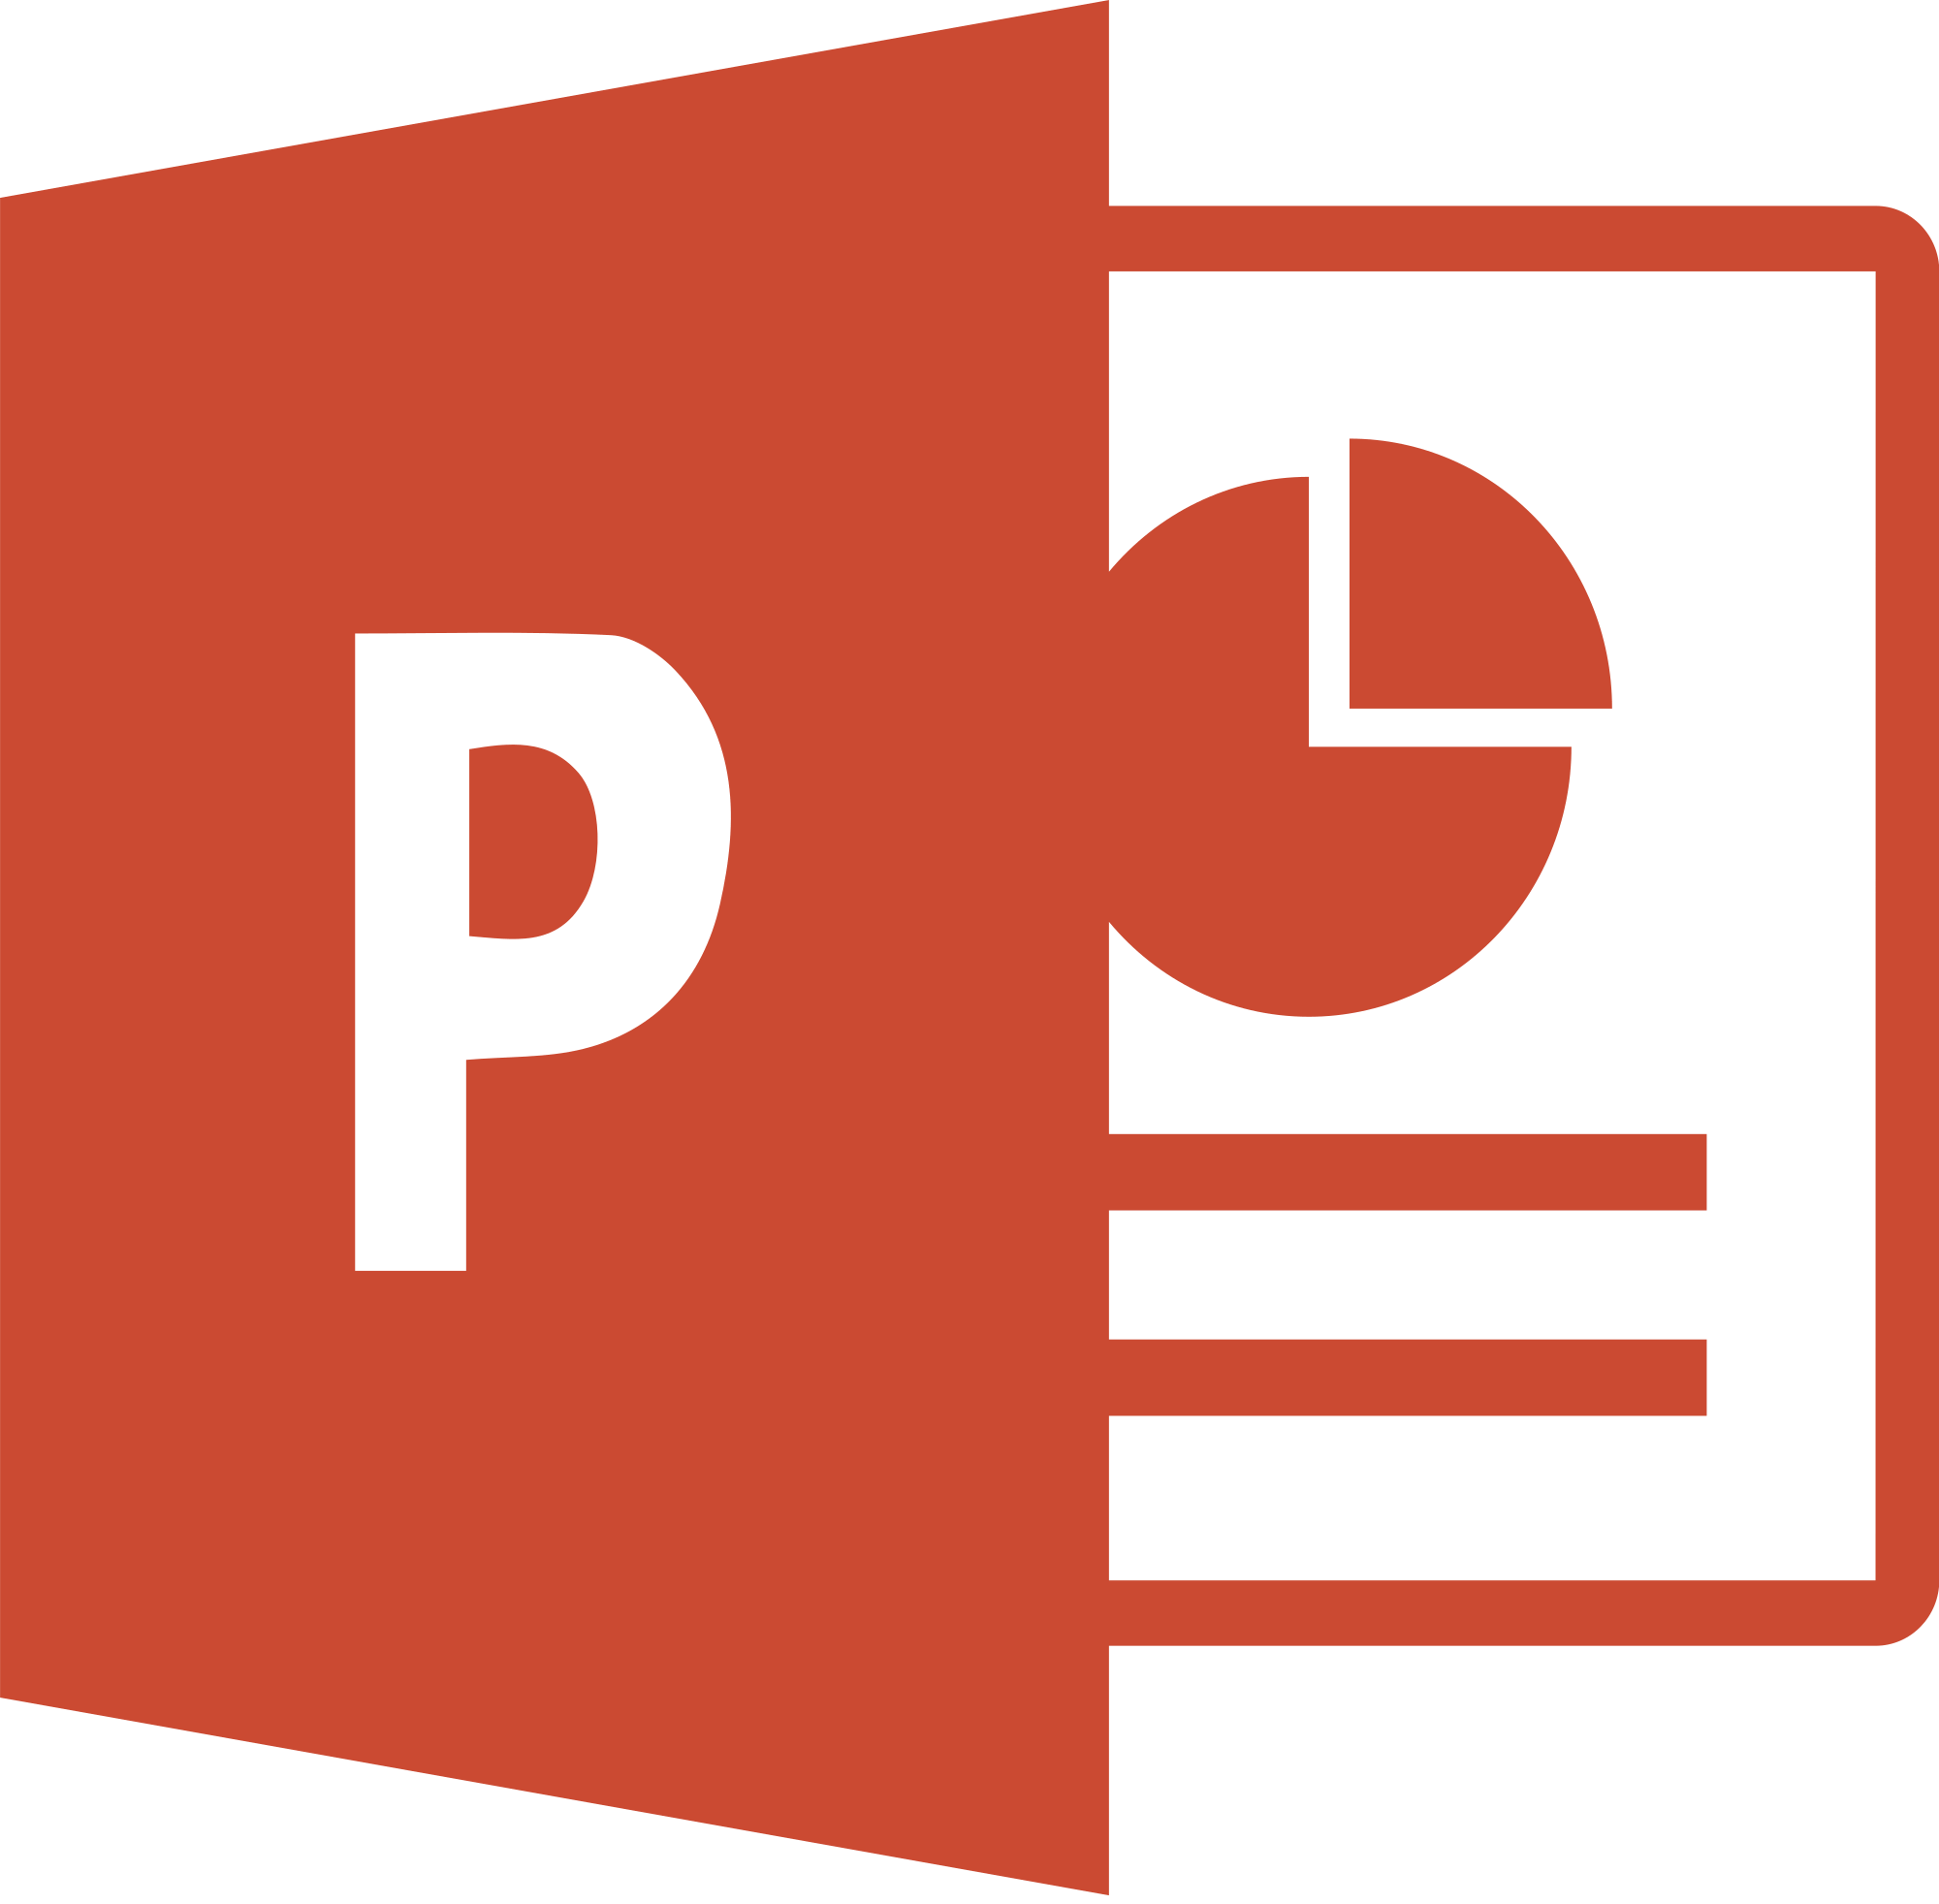 Microsoft PowerPoint Logo - File:Microsoft PowerPoint 2013 logo.svg - Wikimedia Commons